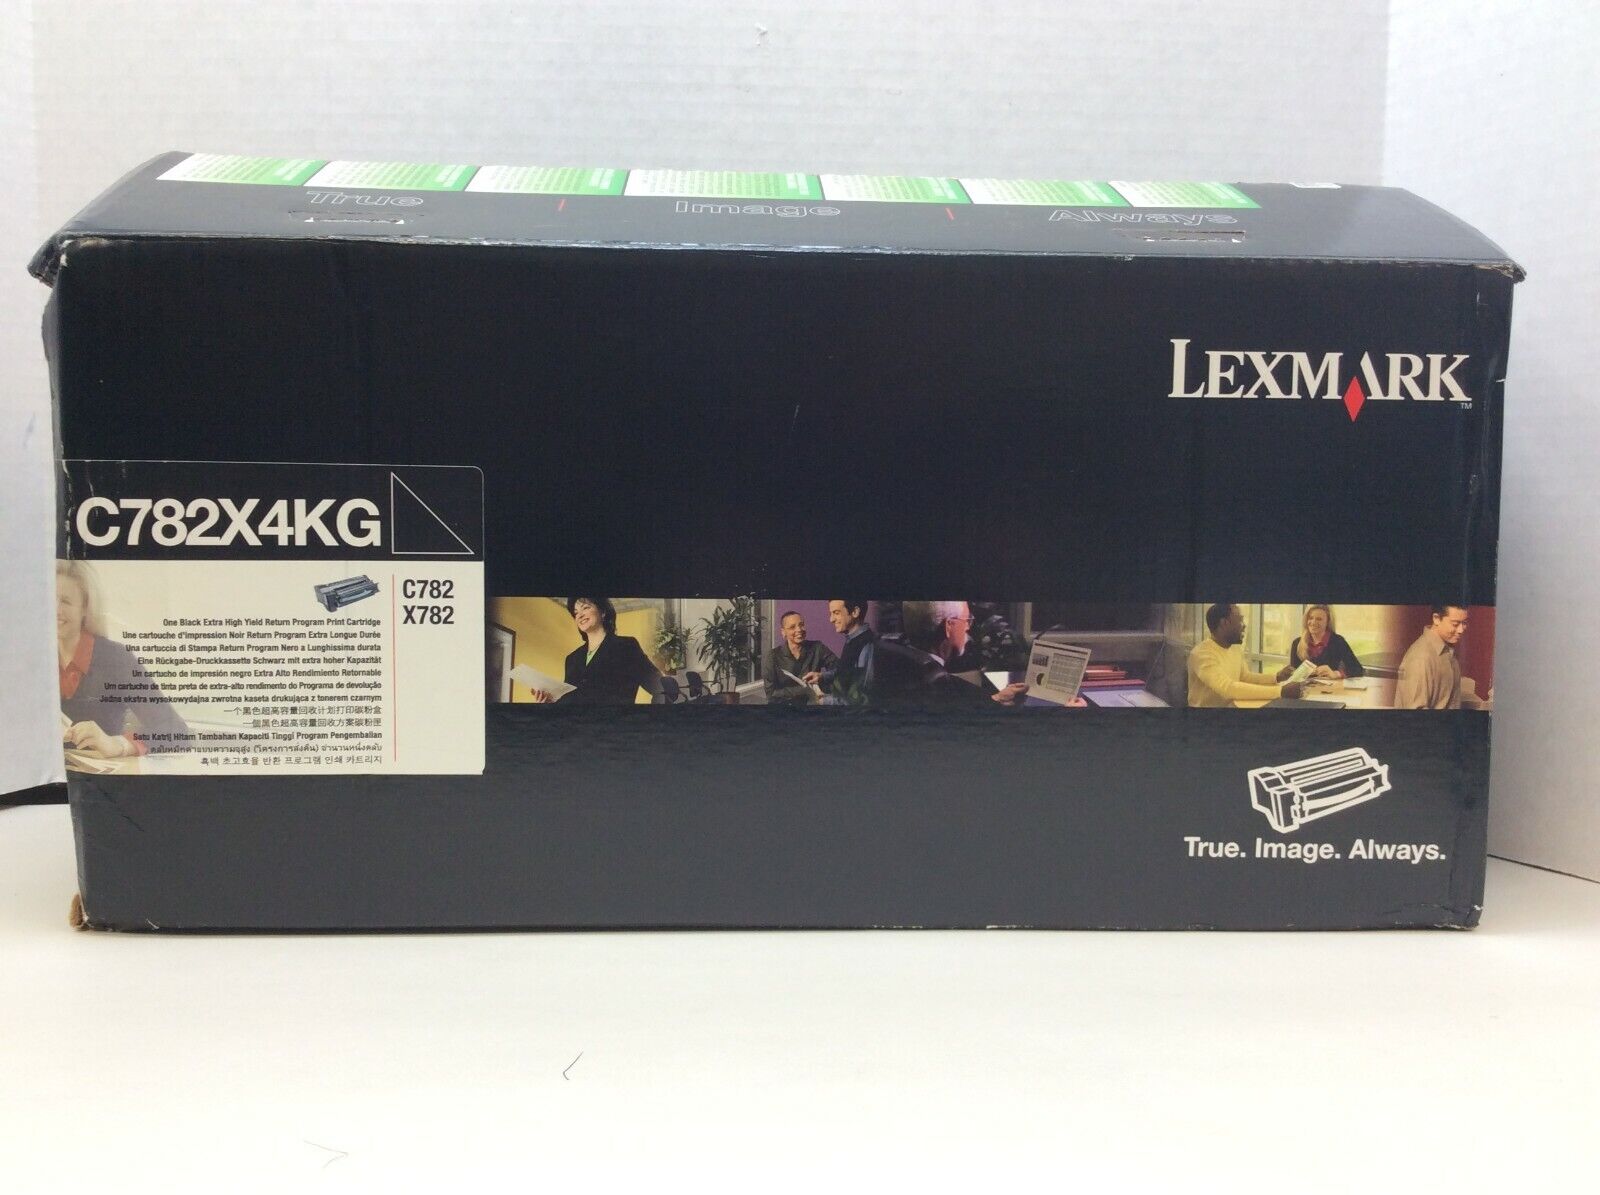 Lexmark Extra High Yield Black Return Program Toner Cartridge, C782X4KG